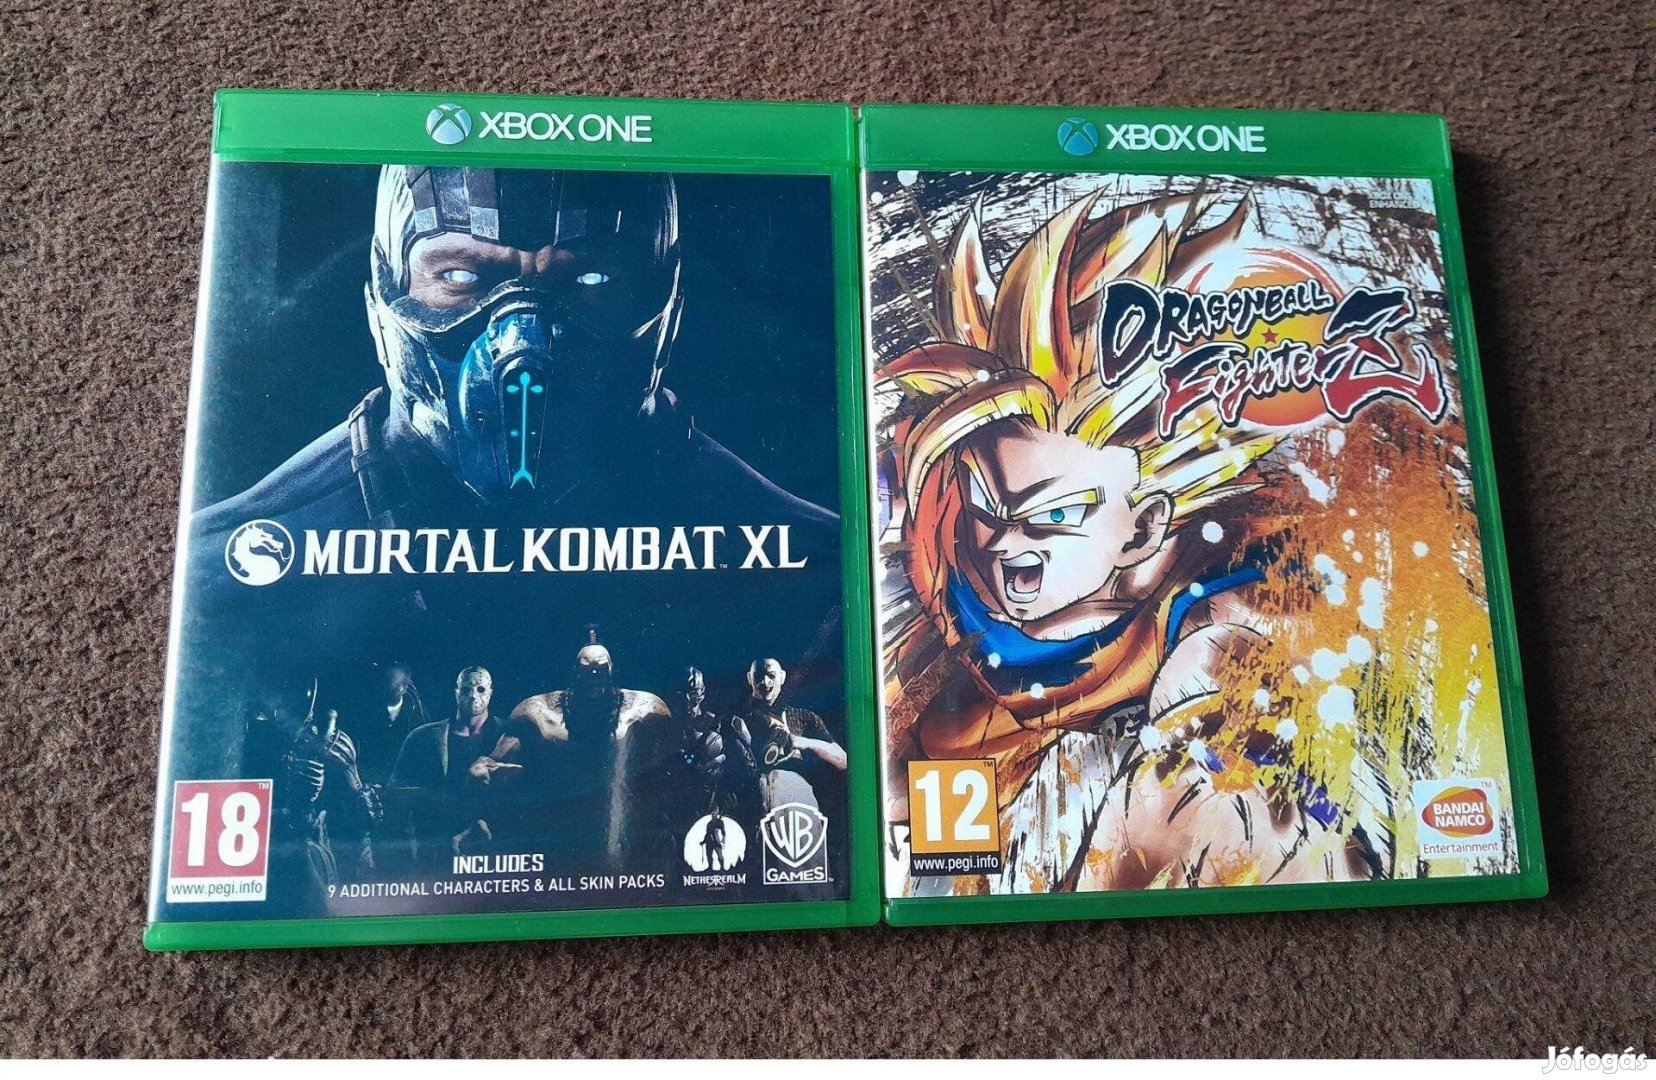 Dragon ball fighterz + Mortal kombat xbox one